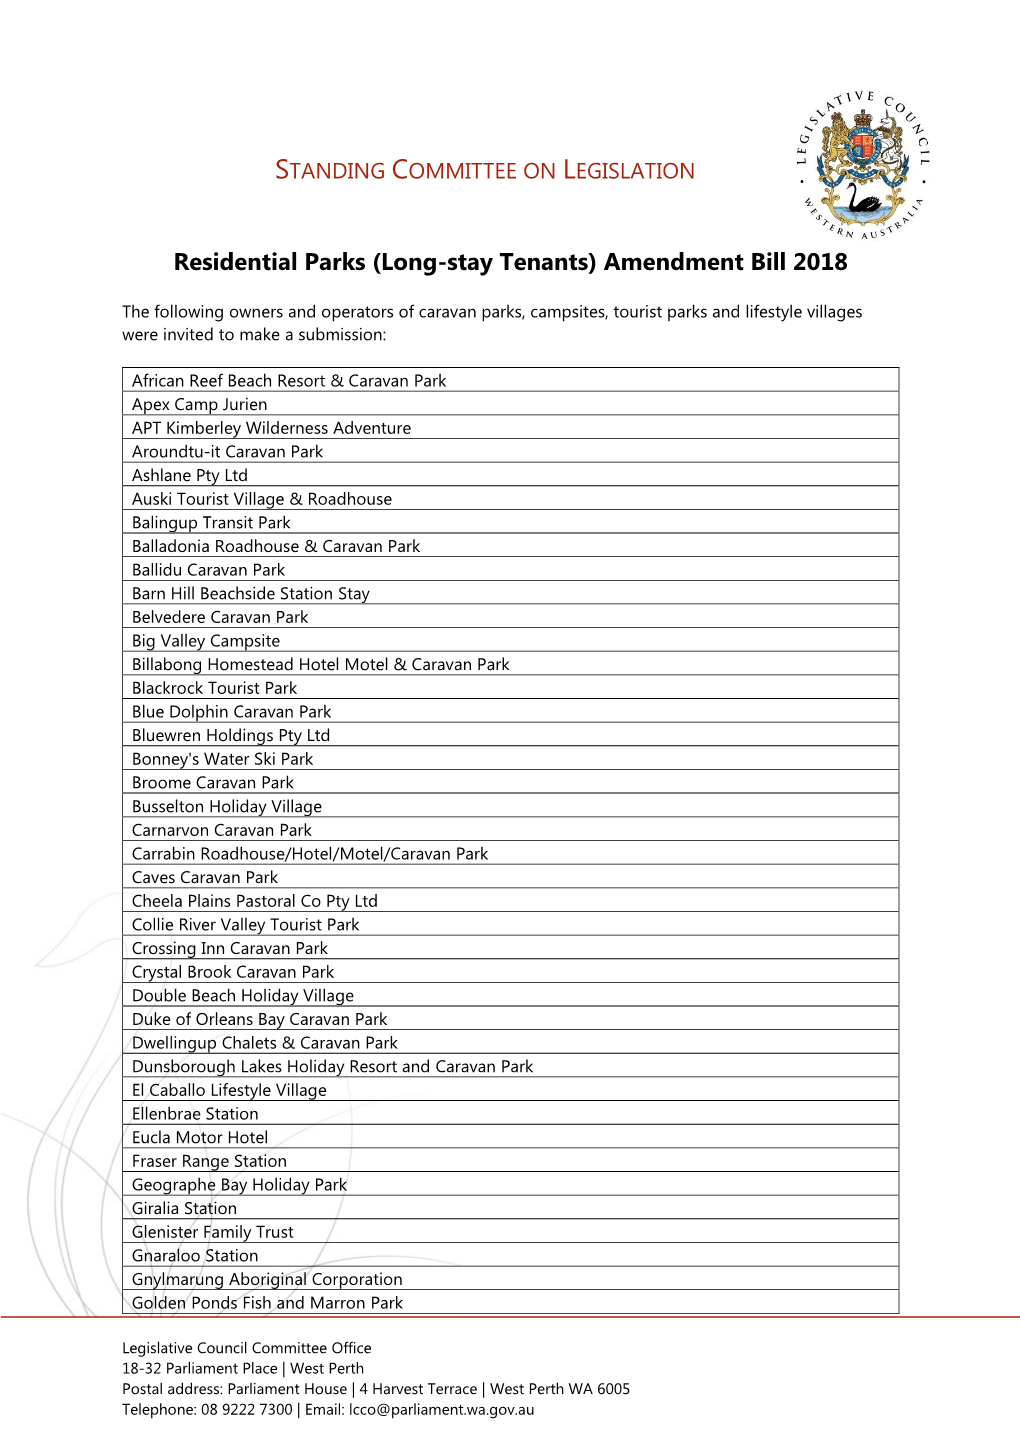 Residential Parks (Long-Stay Tenants) Amendment Bill 2018